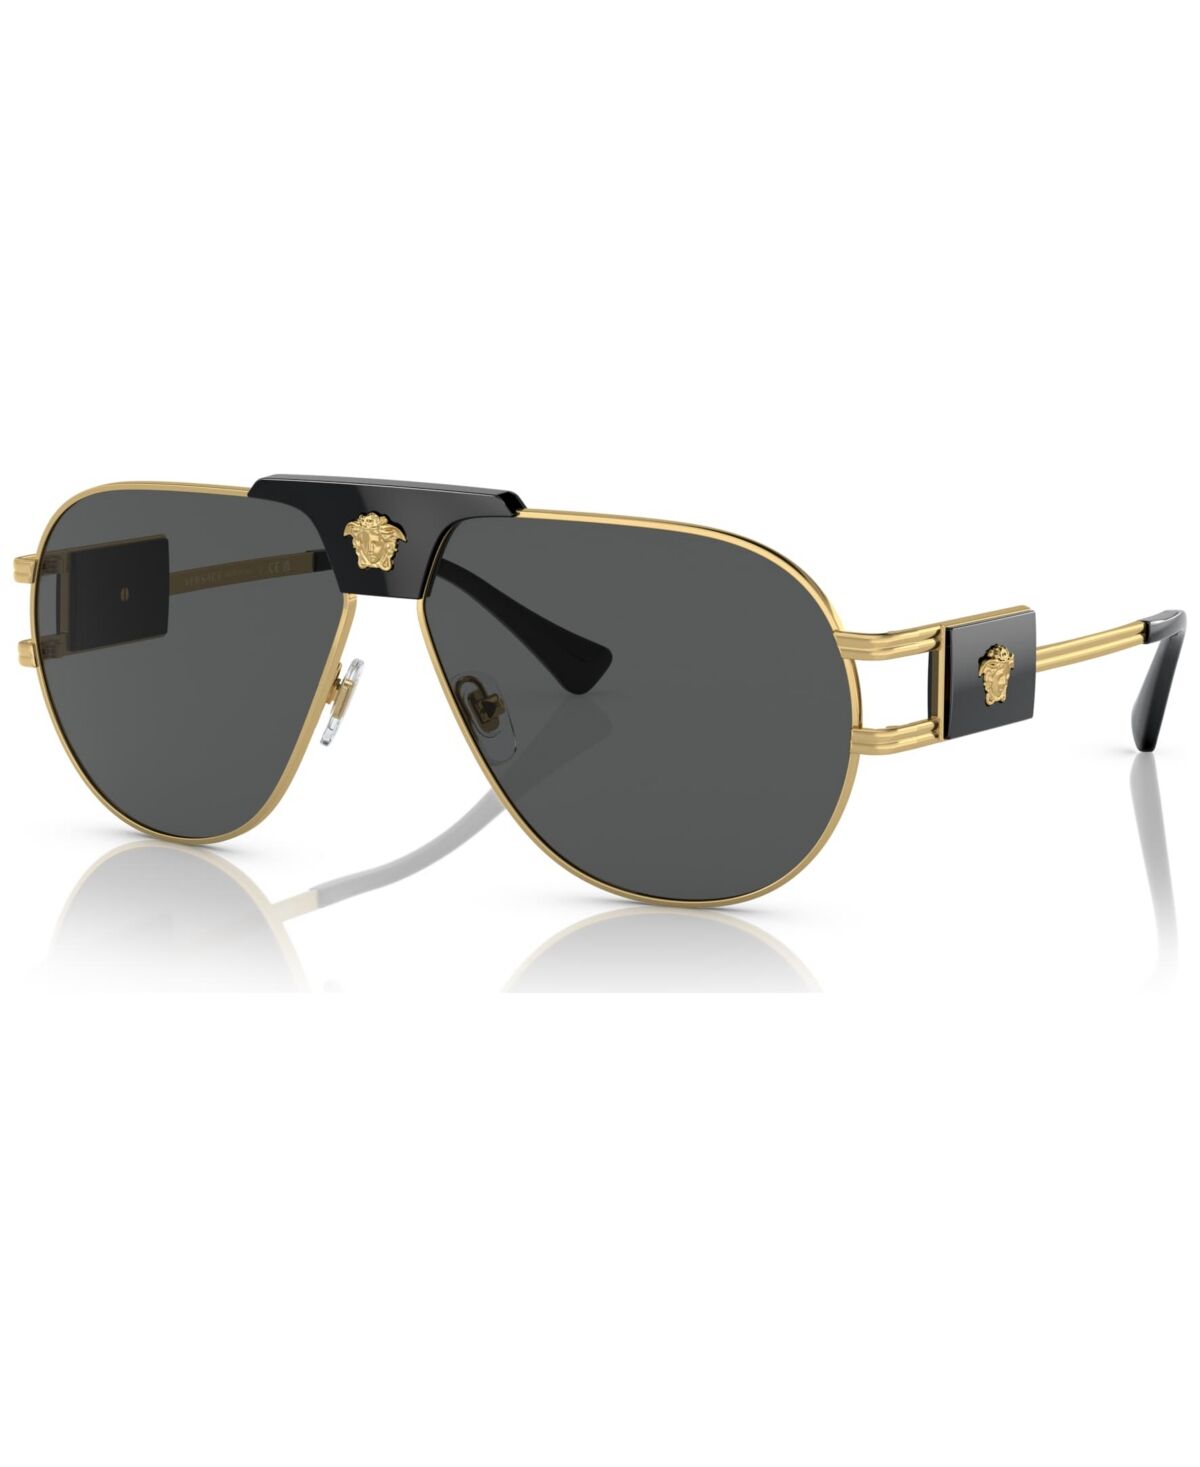 Versace Men's Sunglasses, VE225263-x 63 - Gold-Tone, Black